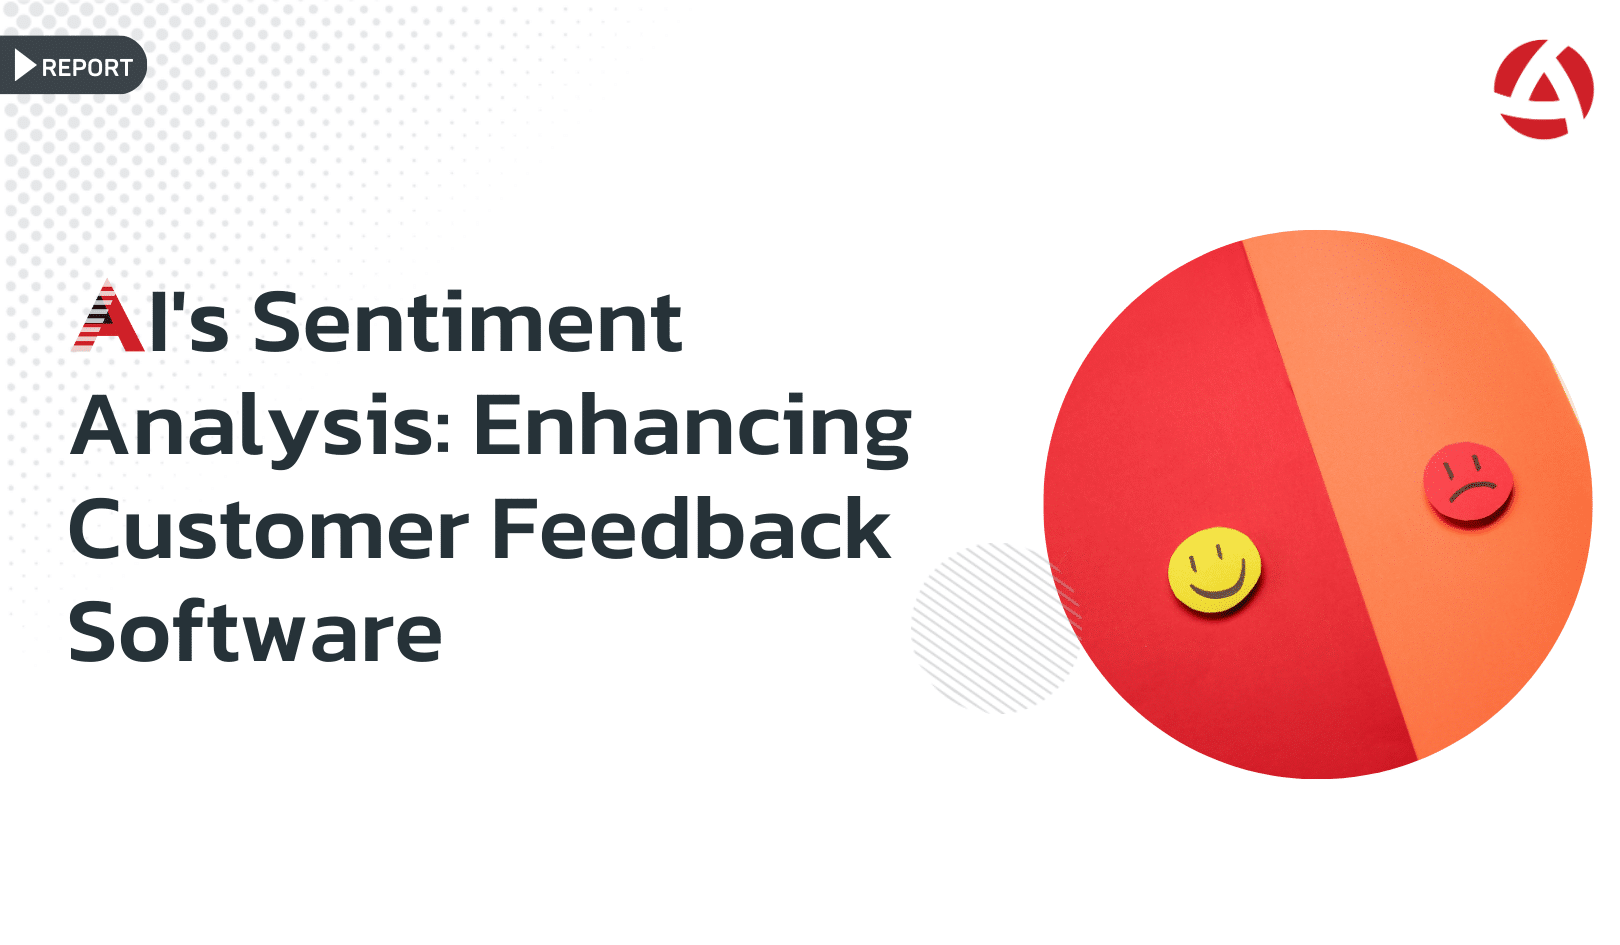 AI's Sentiment Analysis: Enhancing Customer Feedback Software